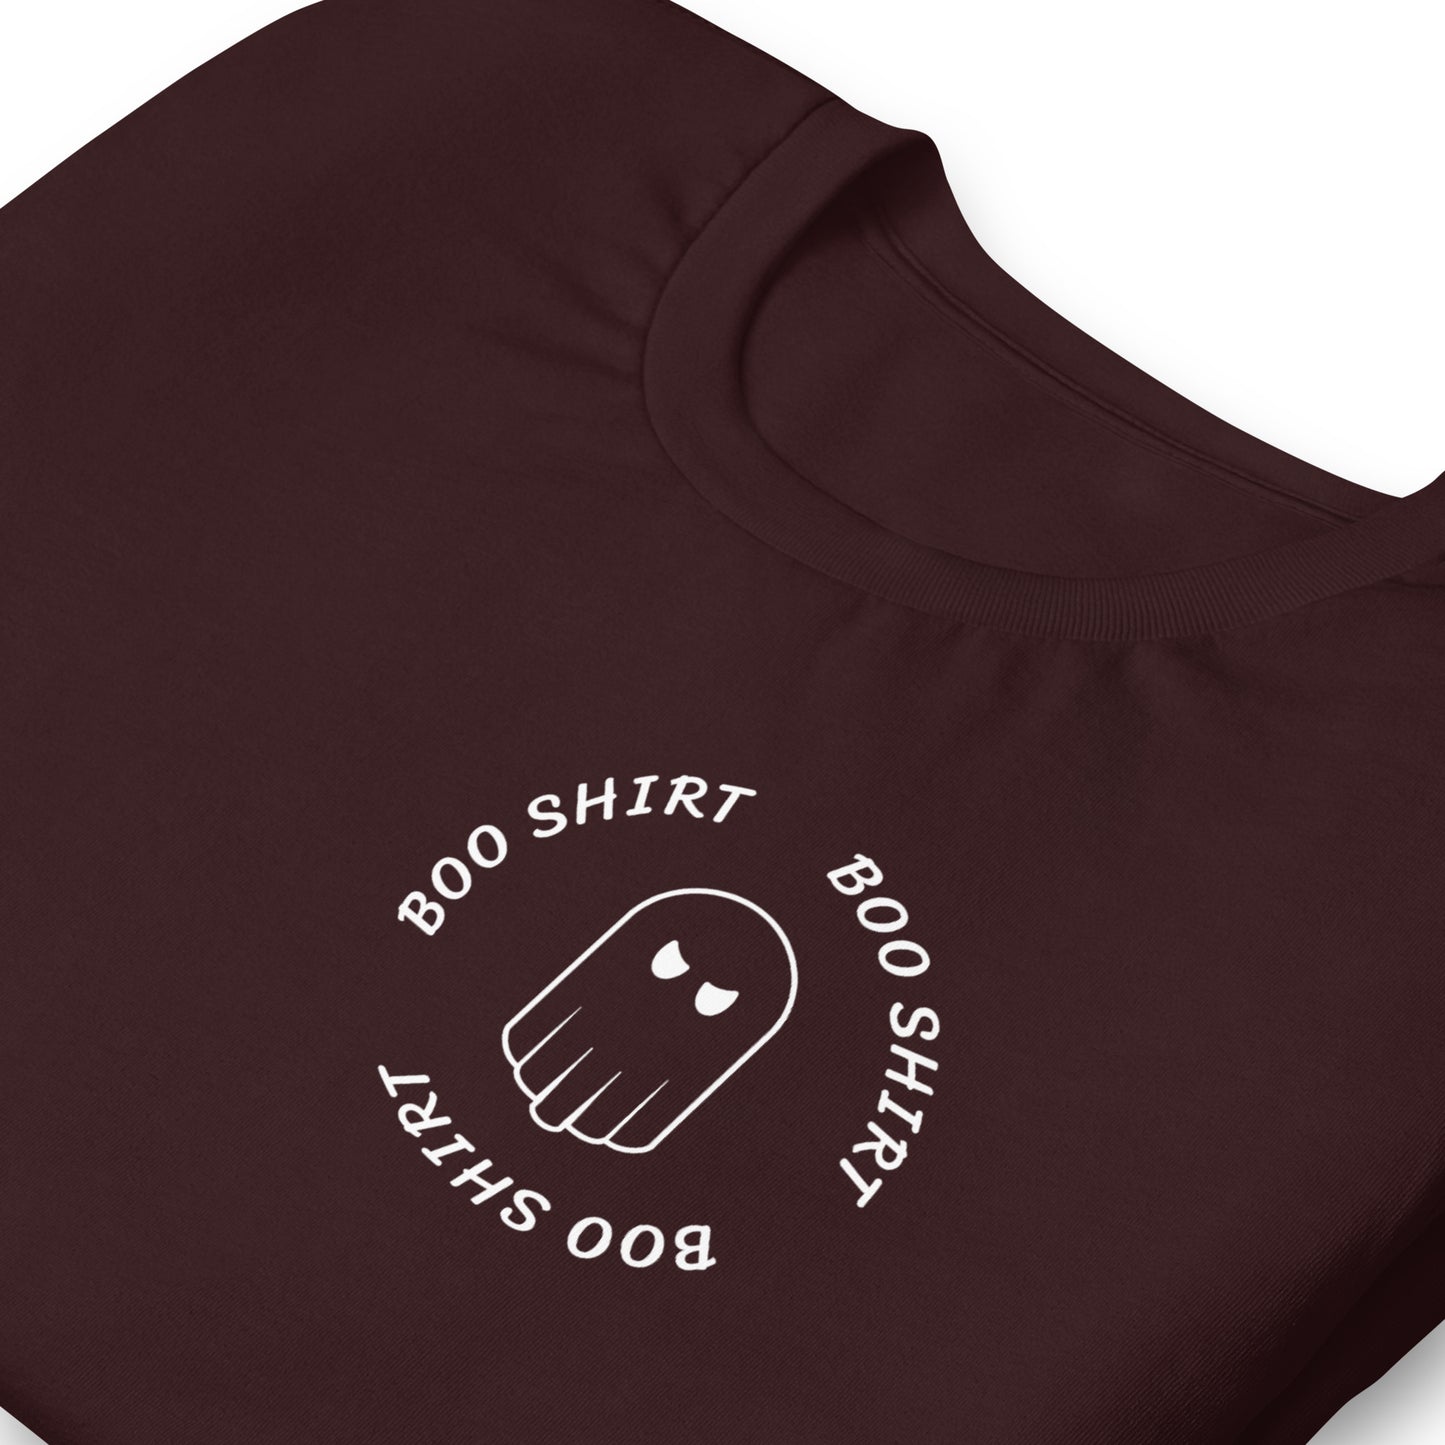 “Boo Shirt” Unisex Tee